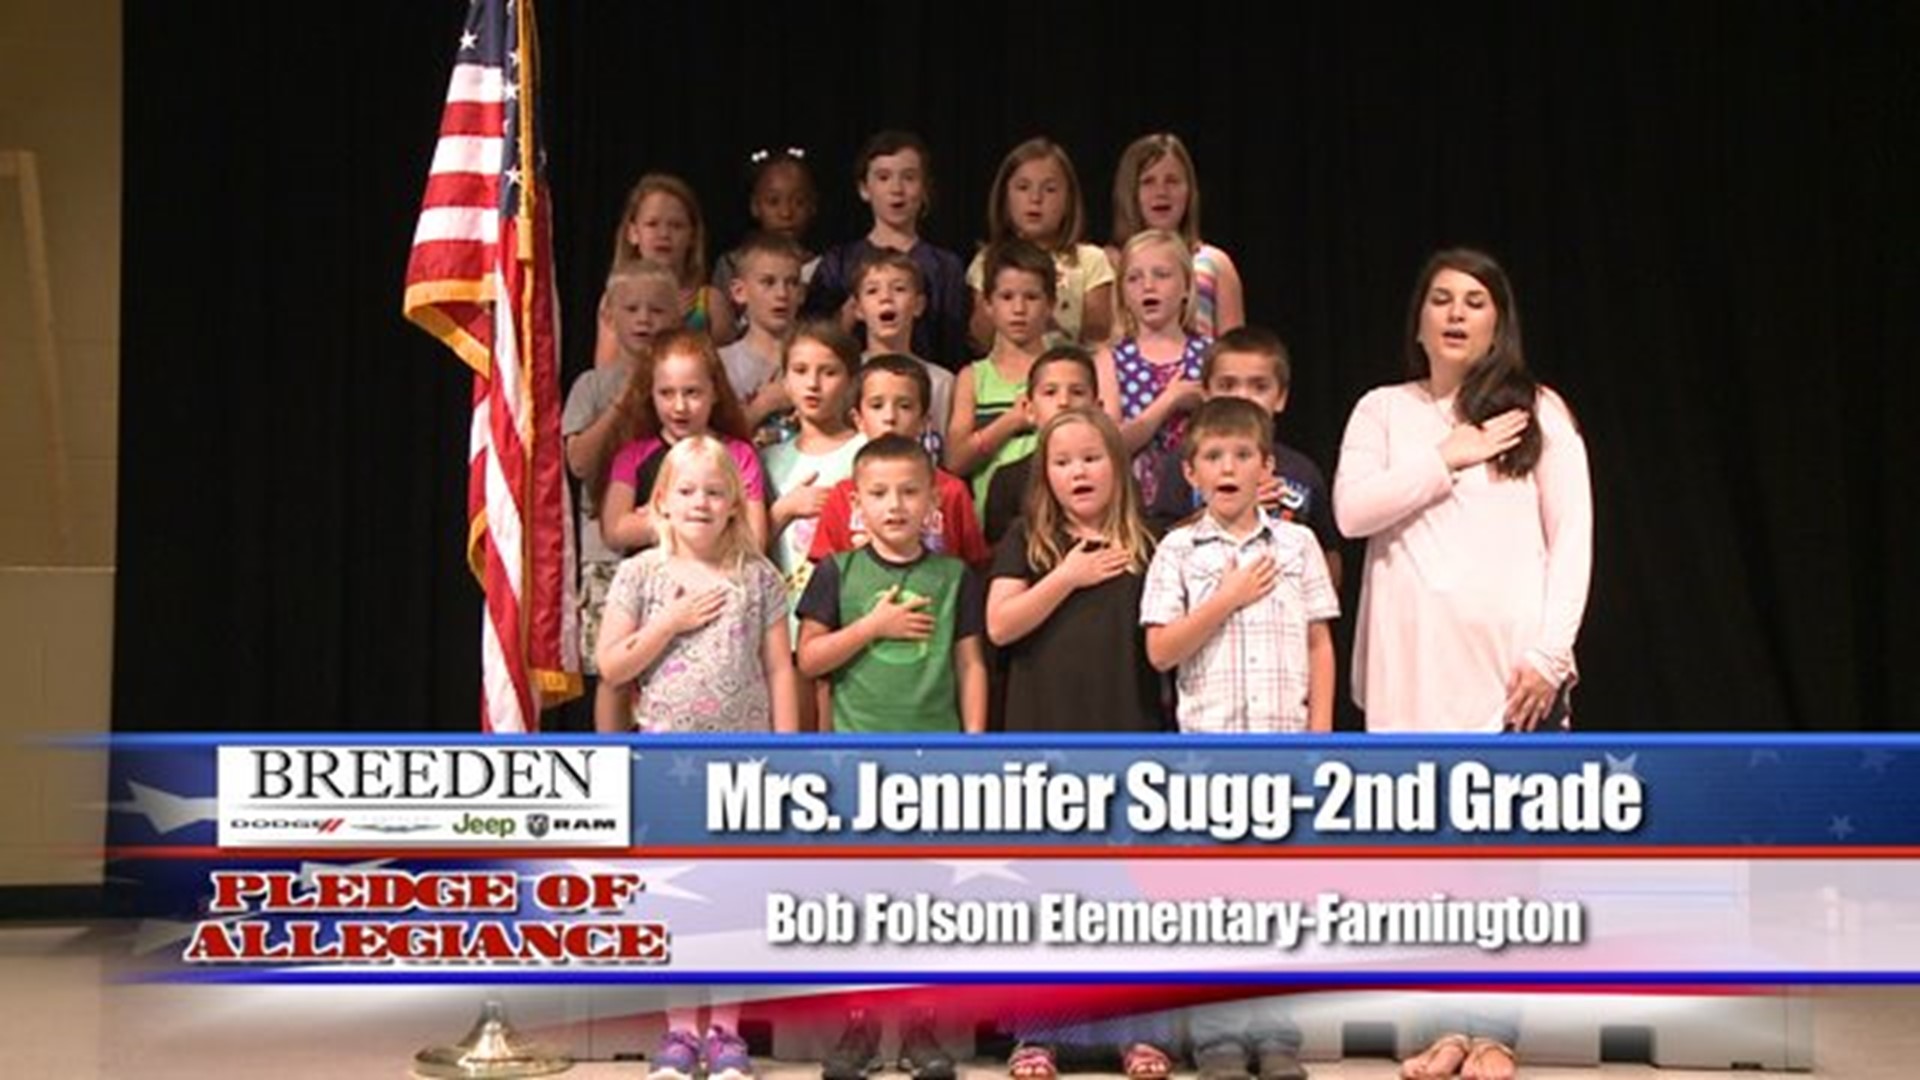 Bob Folsom Elementary - Farmington - Mrs. Jennifer Sugg - 2nd Grade